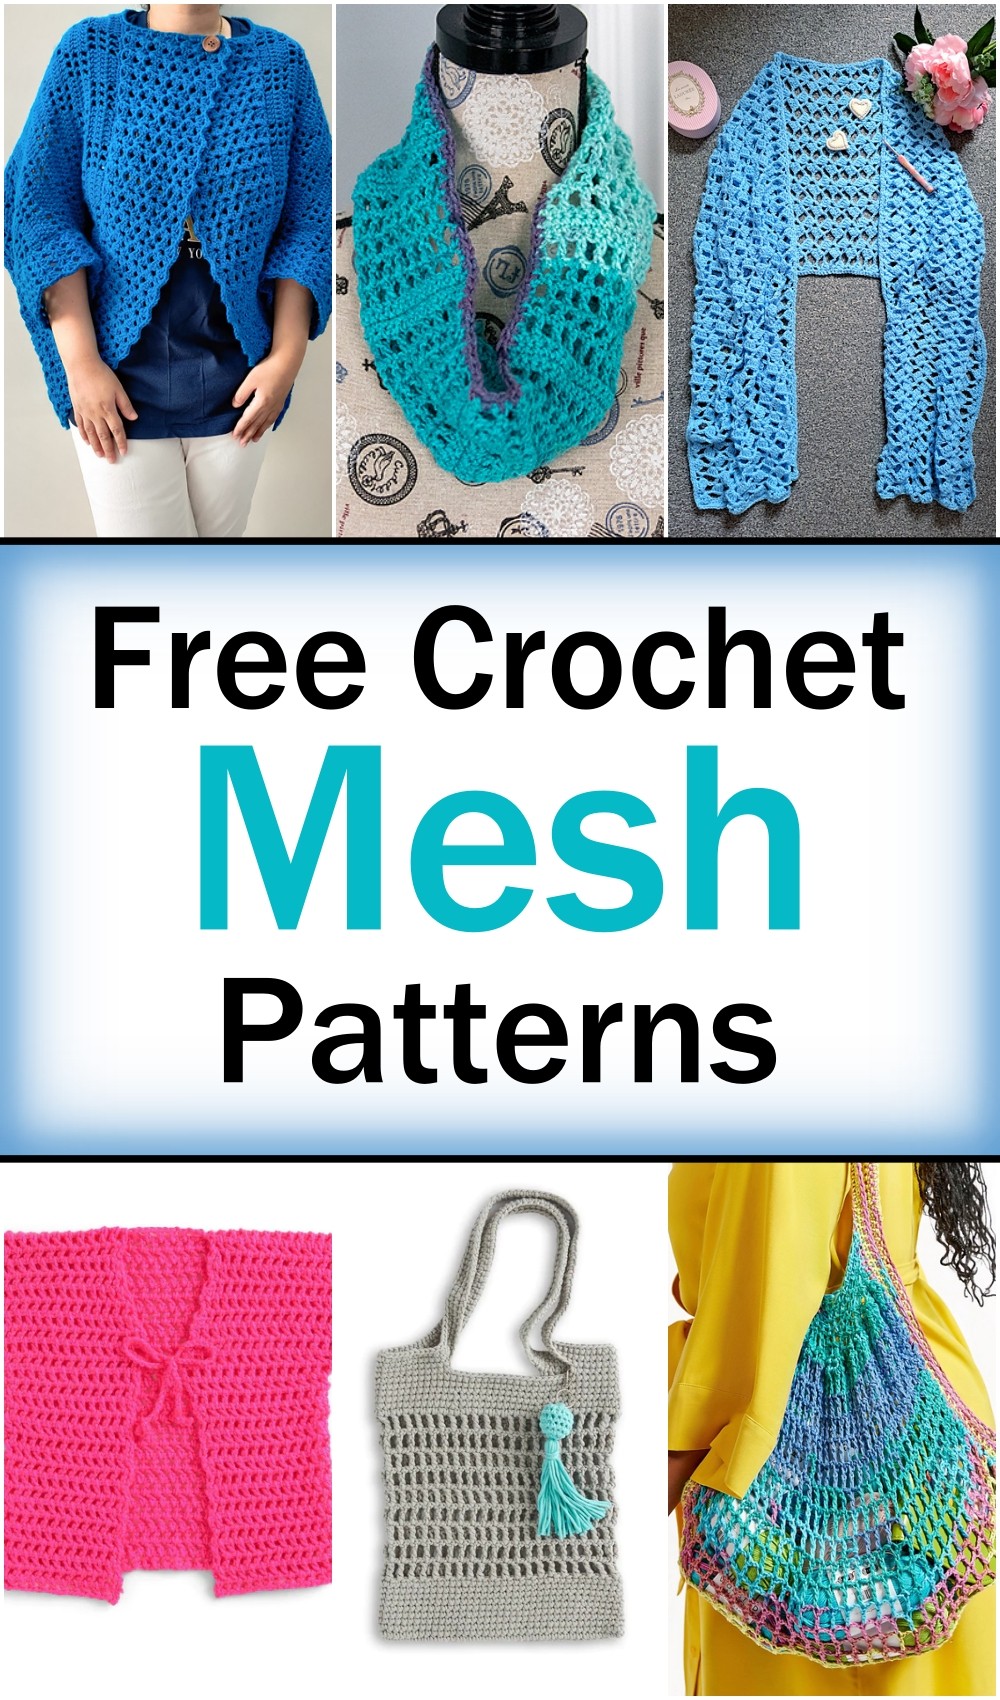 Free Crochet Mesh Patterns